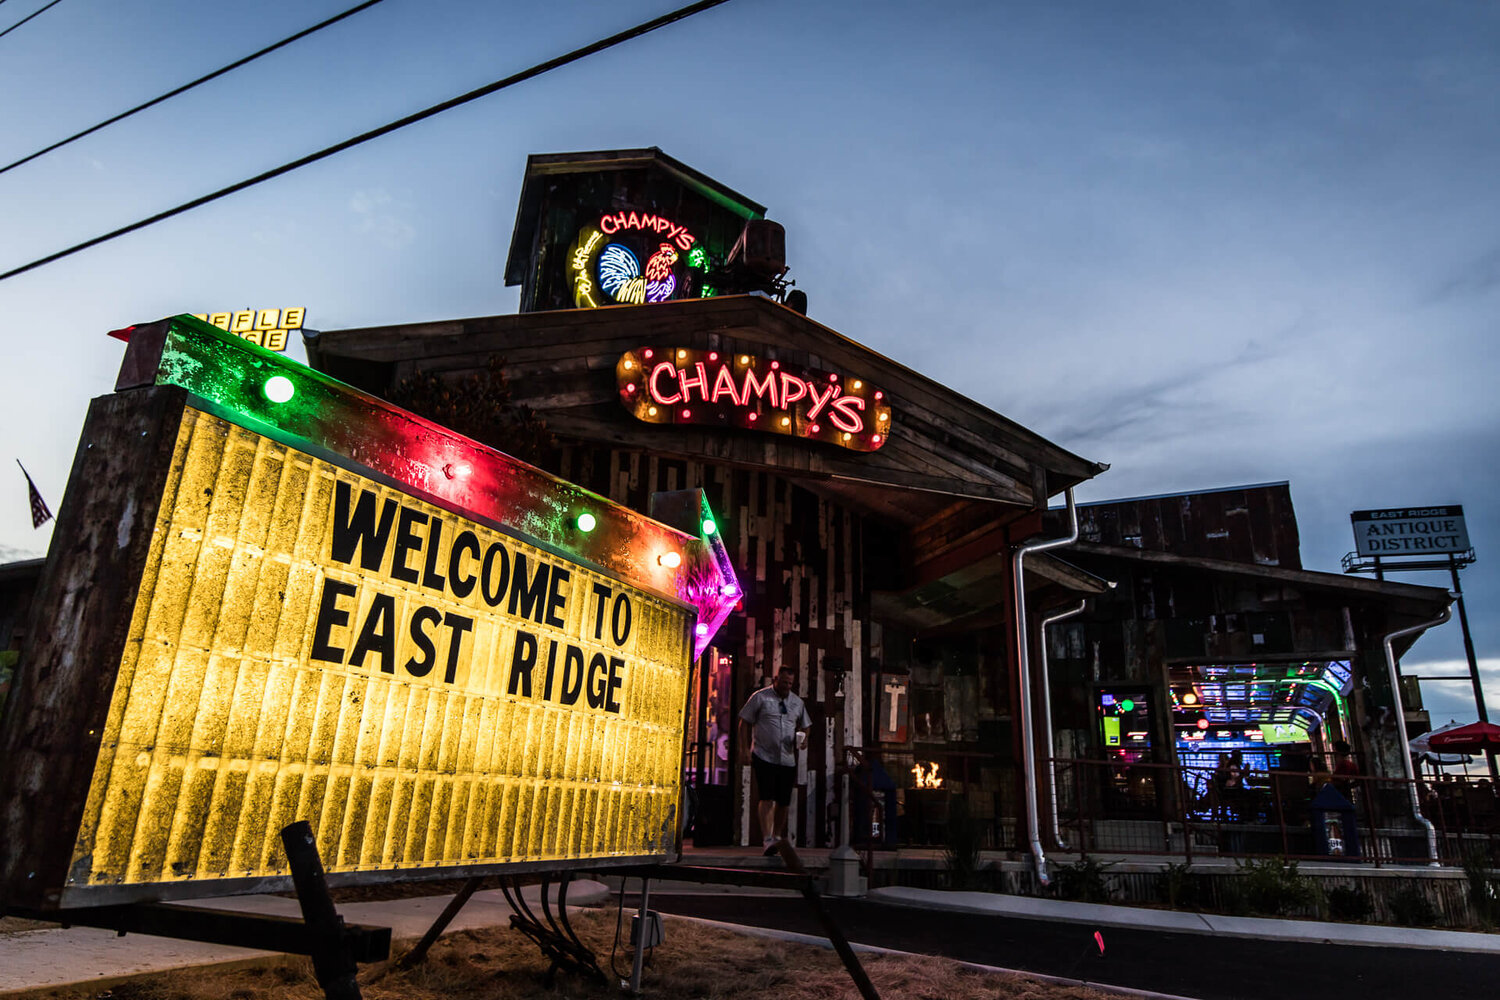 East Ridge — Champy's World Famous Fried Chicken